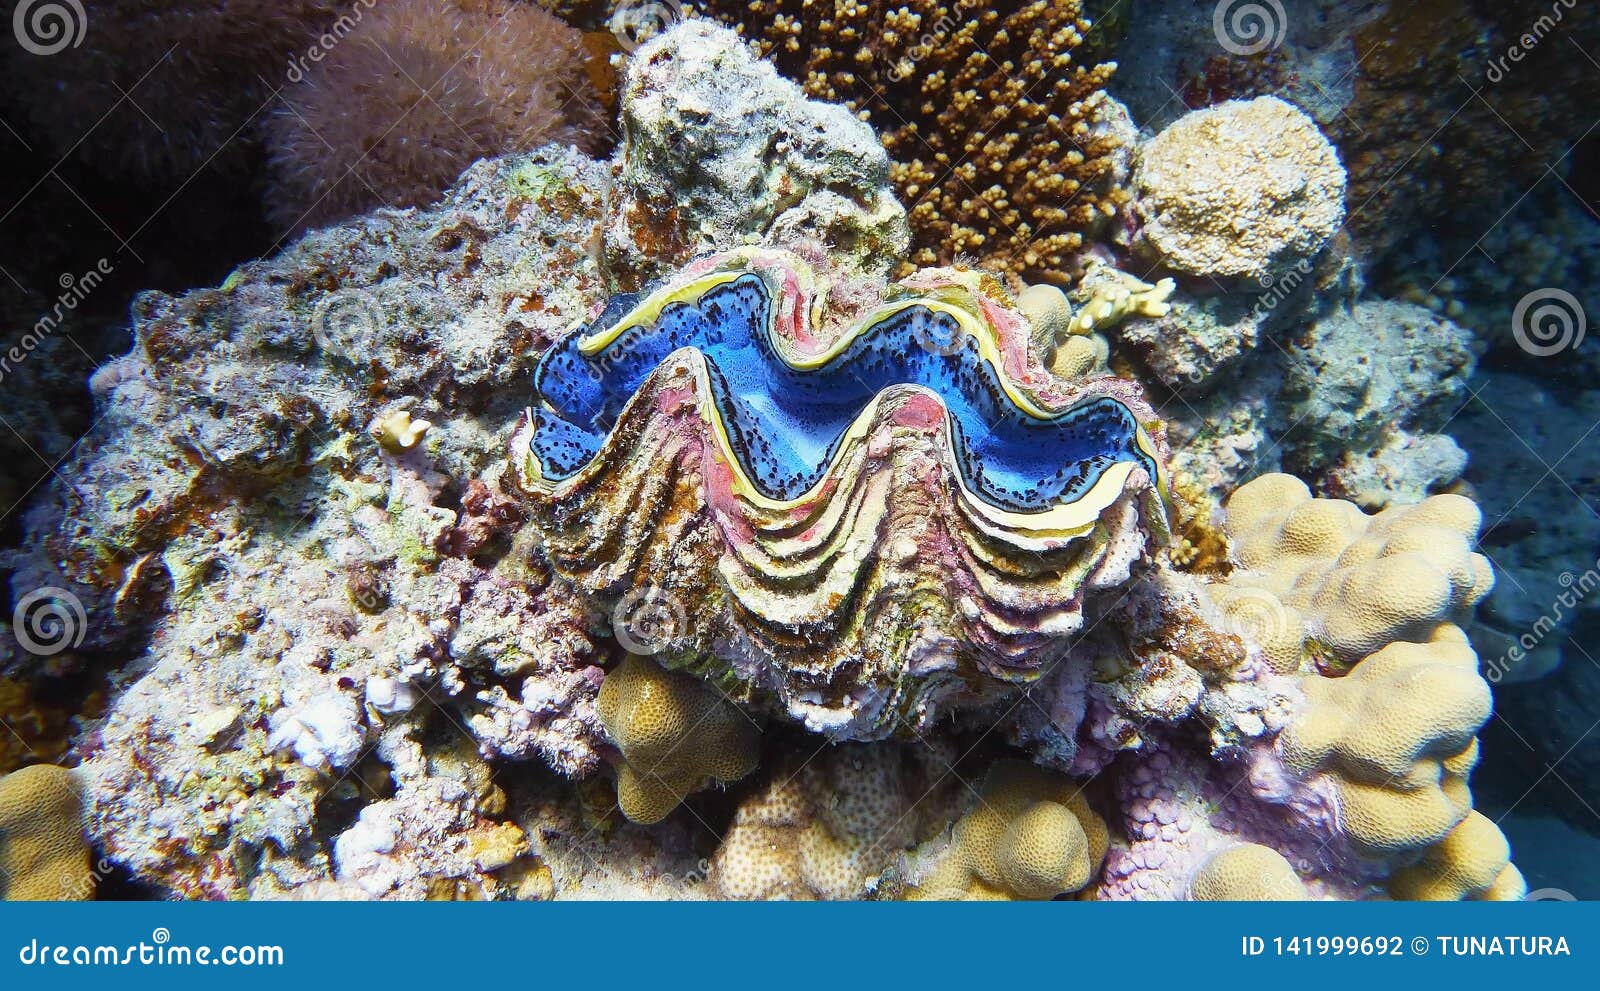 the maxima clam, marine life